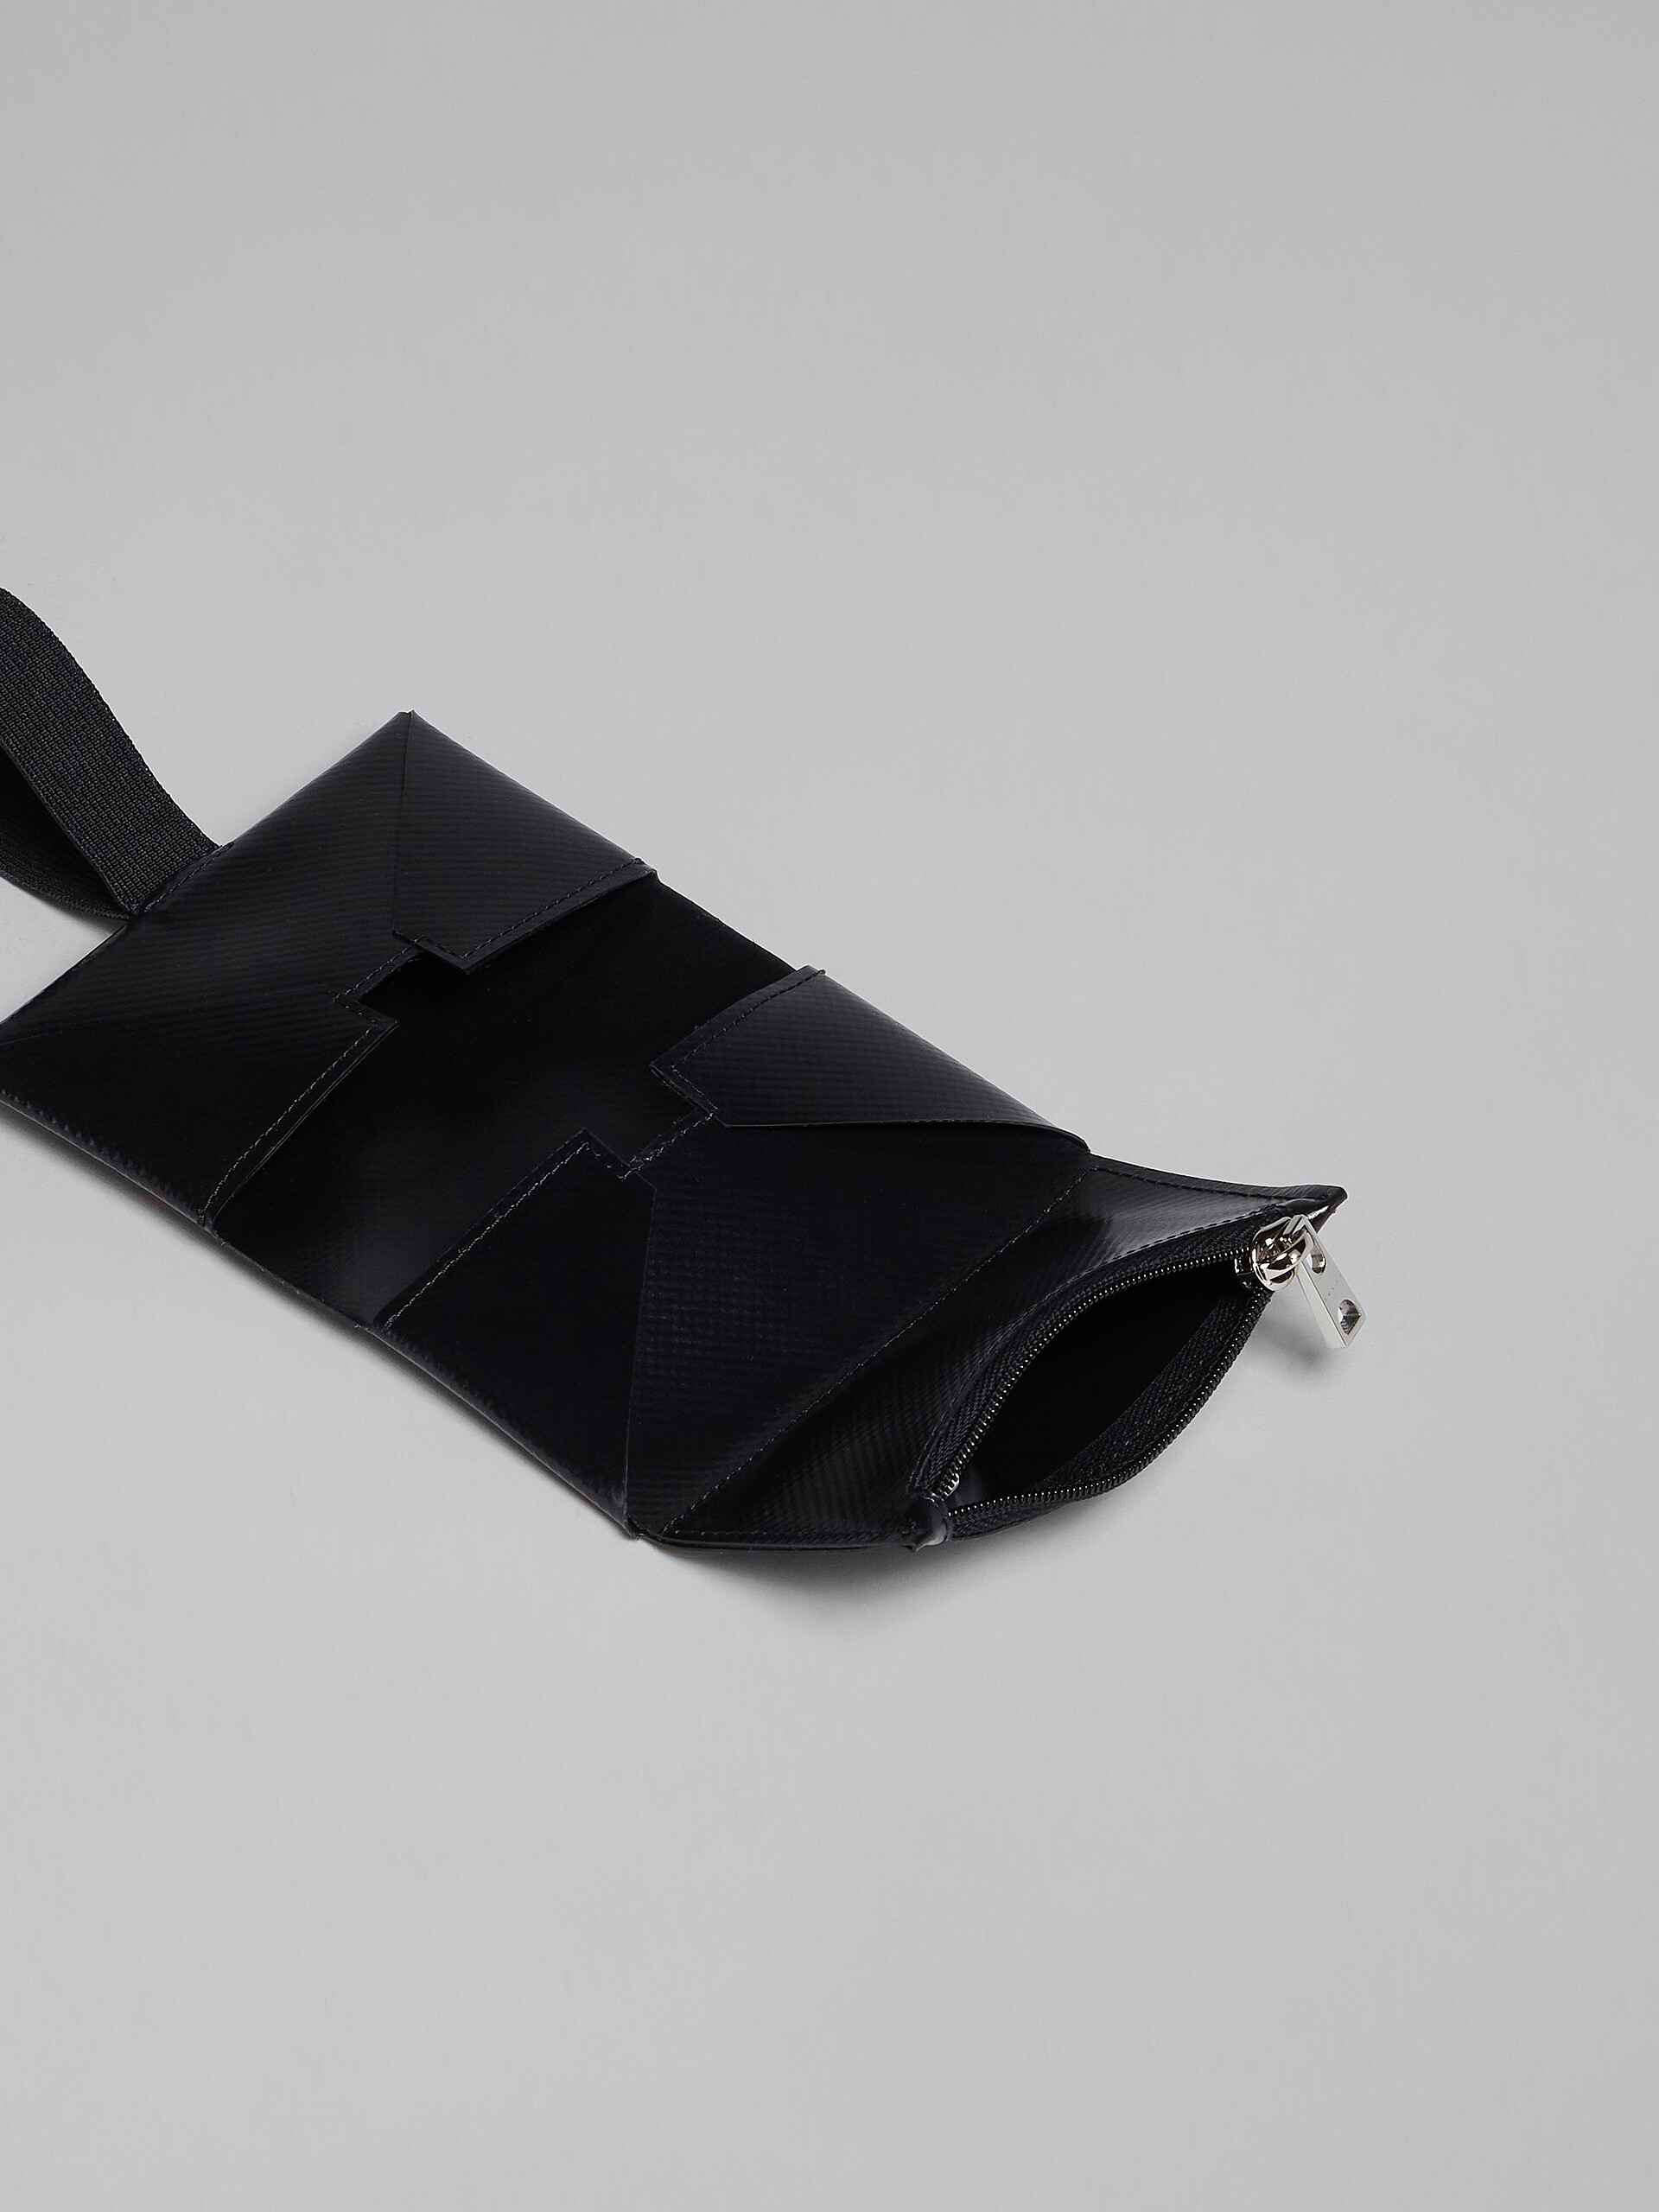 Black tri-fold wallet - Wallets - Image 2